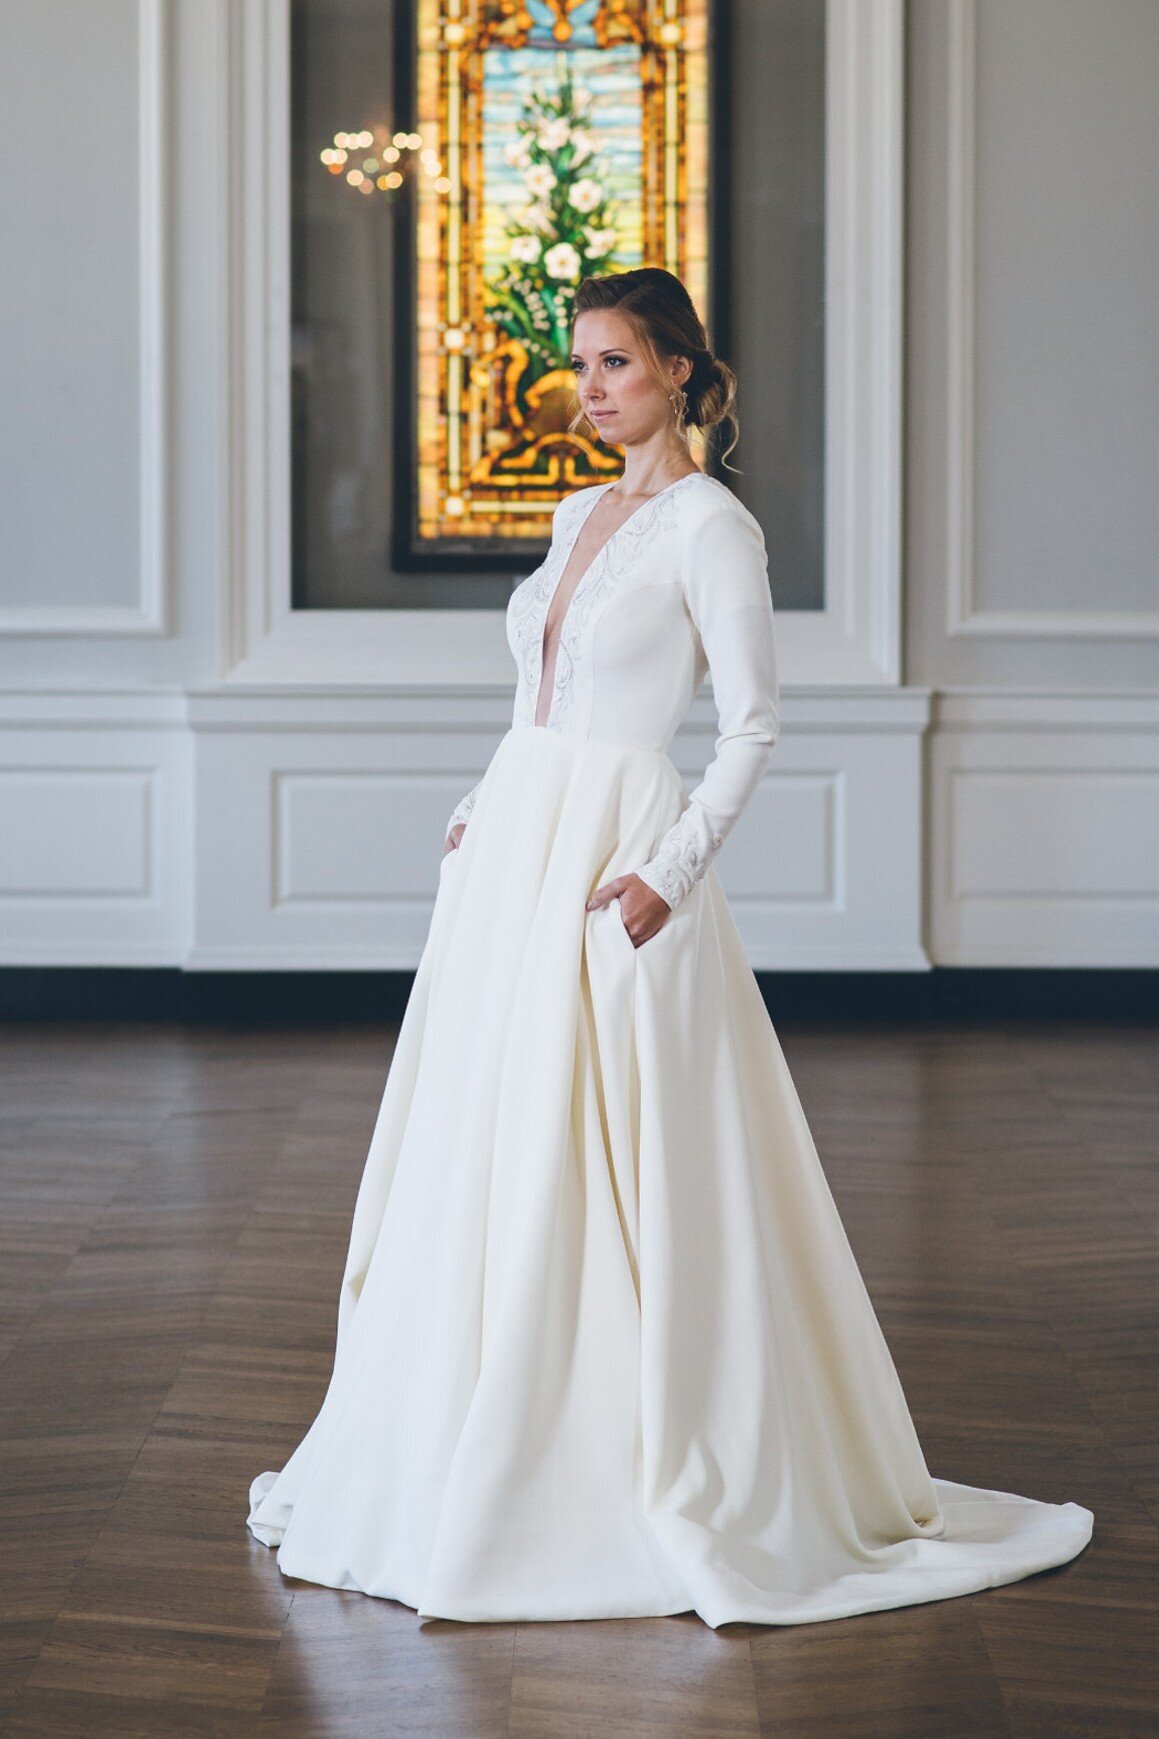 Iman is a long sleeve wedding dress in a ballgown silhouette by indie bridal designer Edith Elan.